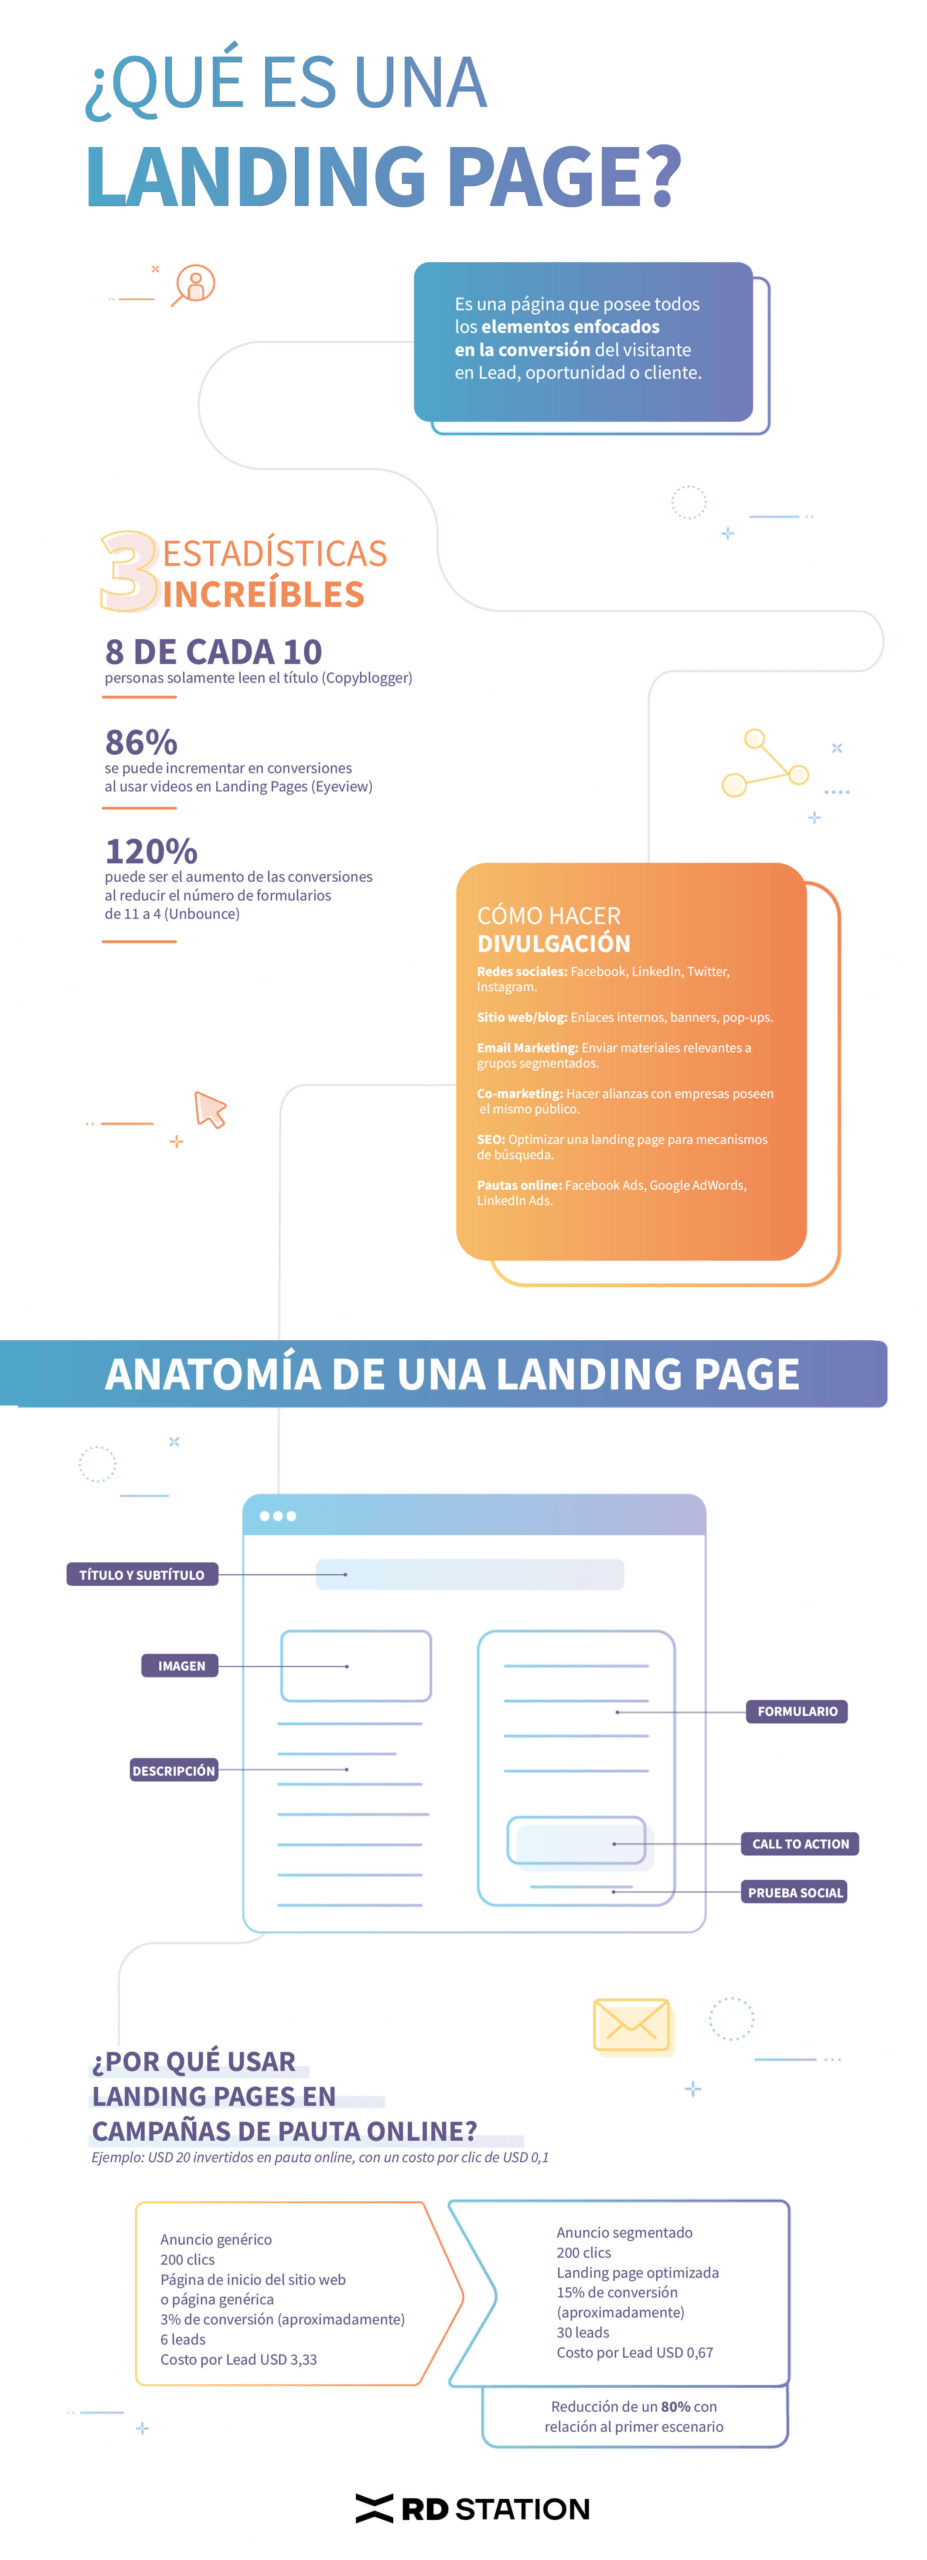 infografia-que-es-una-landing-page-rd-station